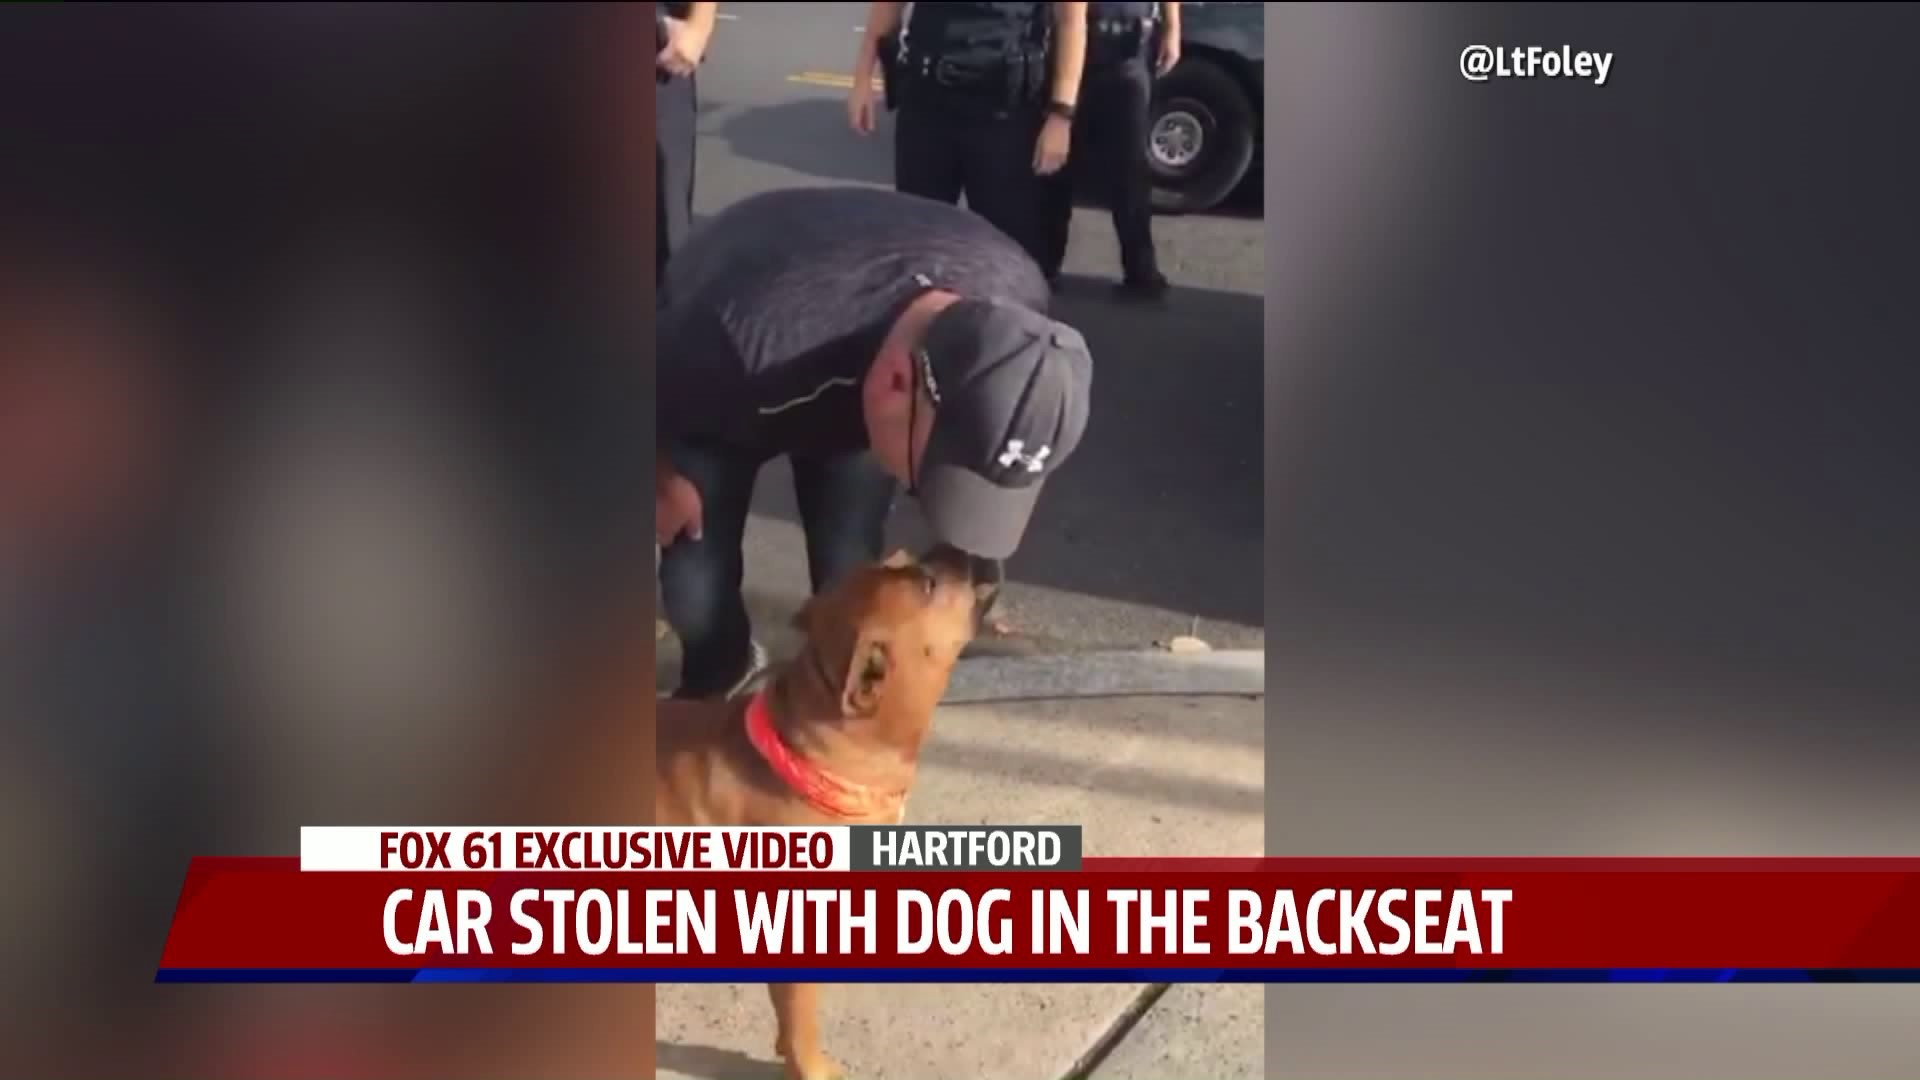 Cops help retrieve stolen dog